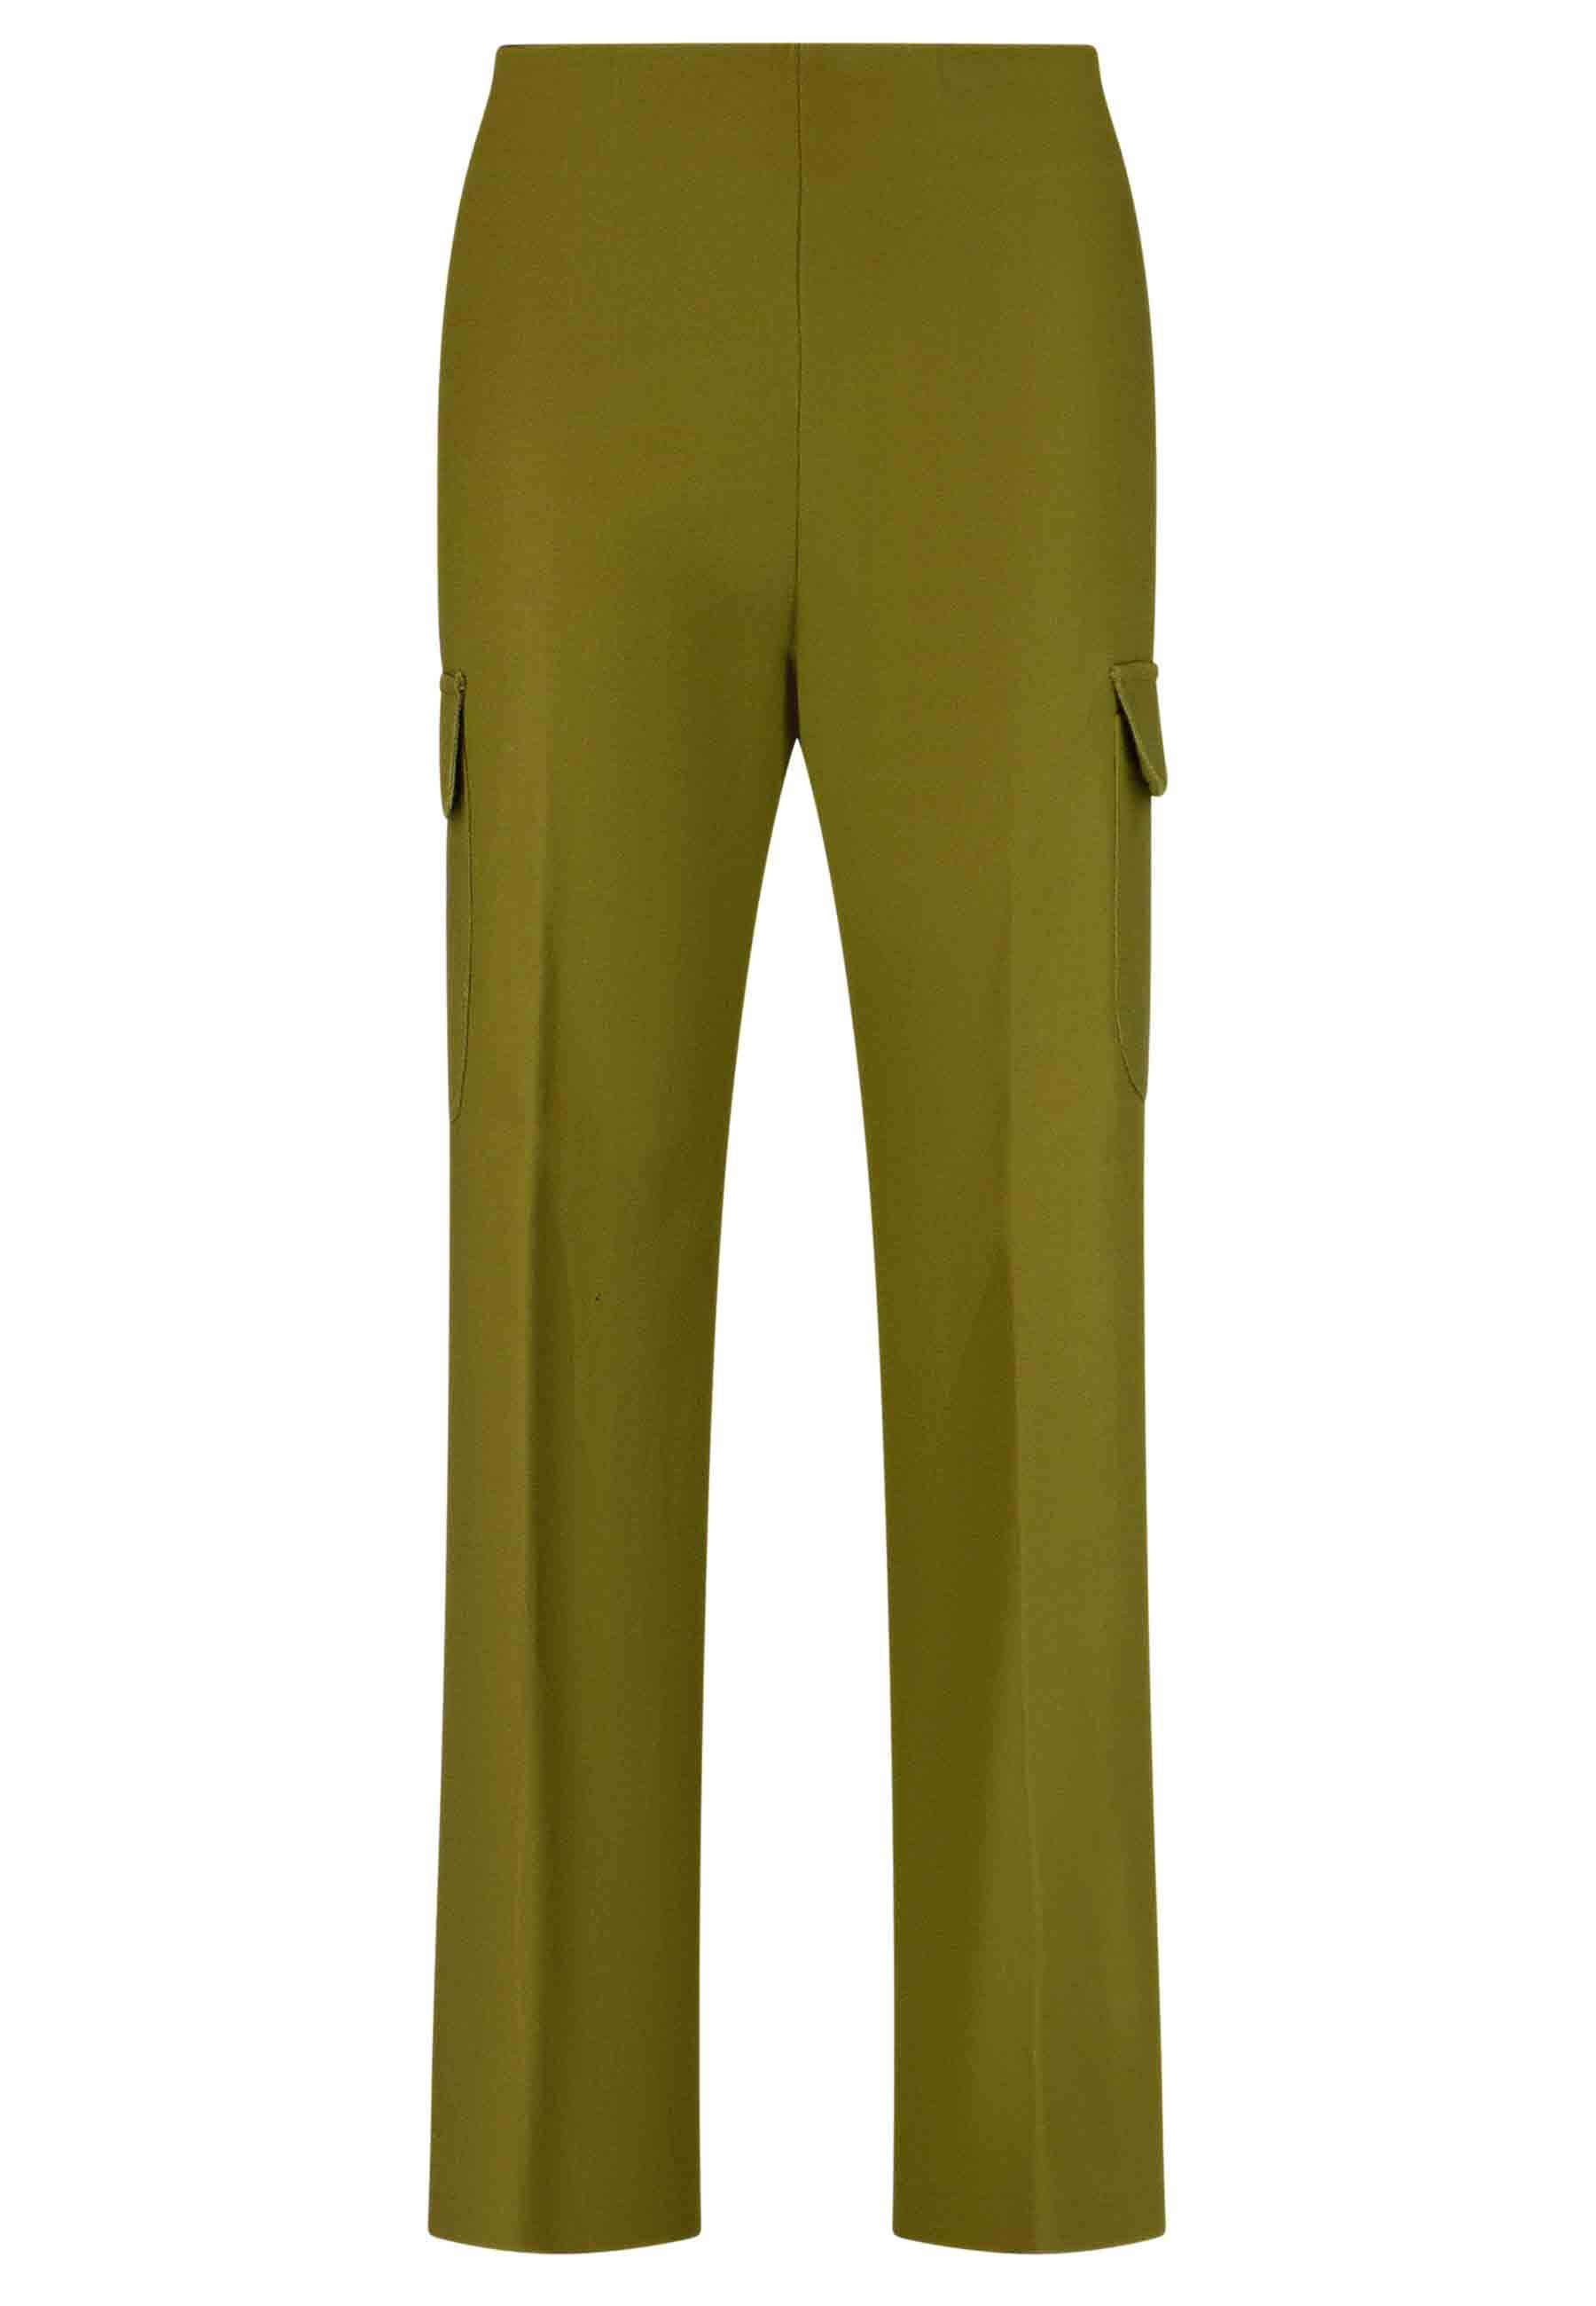 Pantalon cargo femme vert en coton avec poches latérales